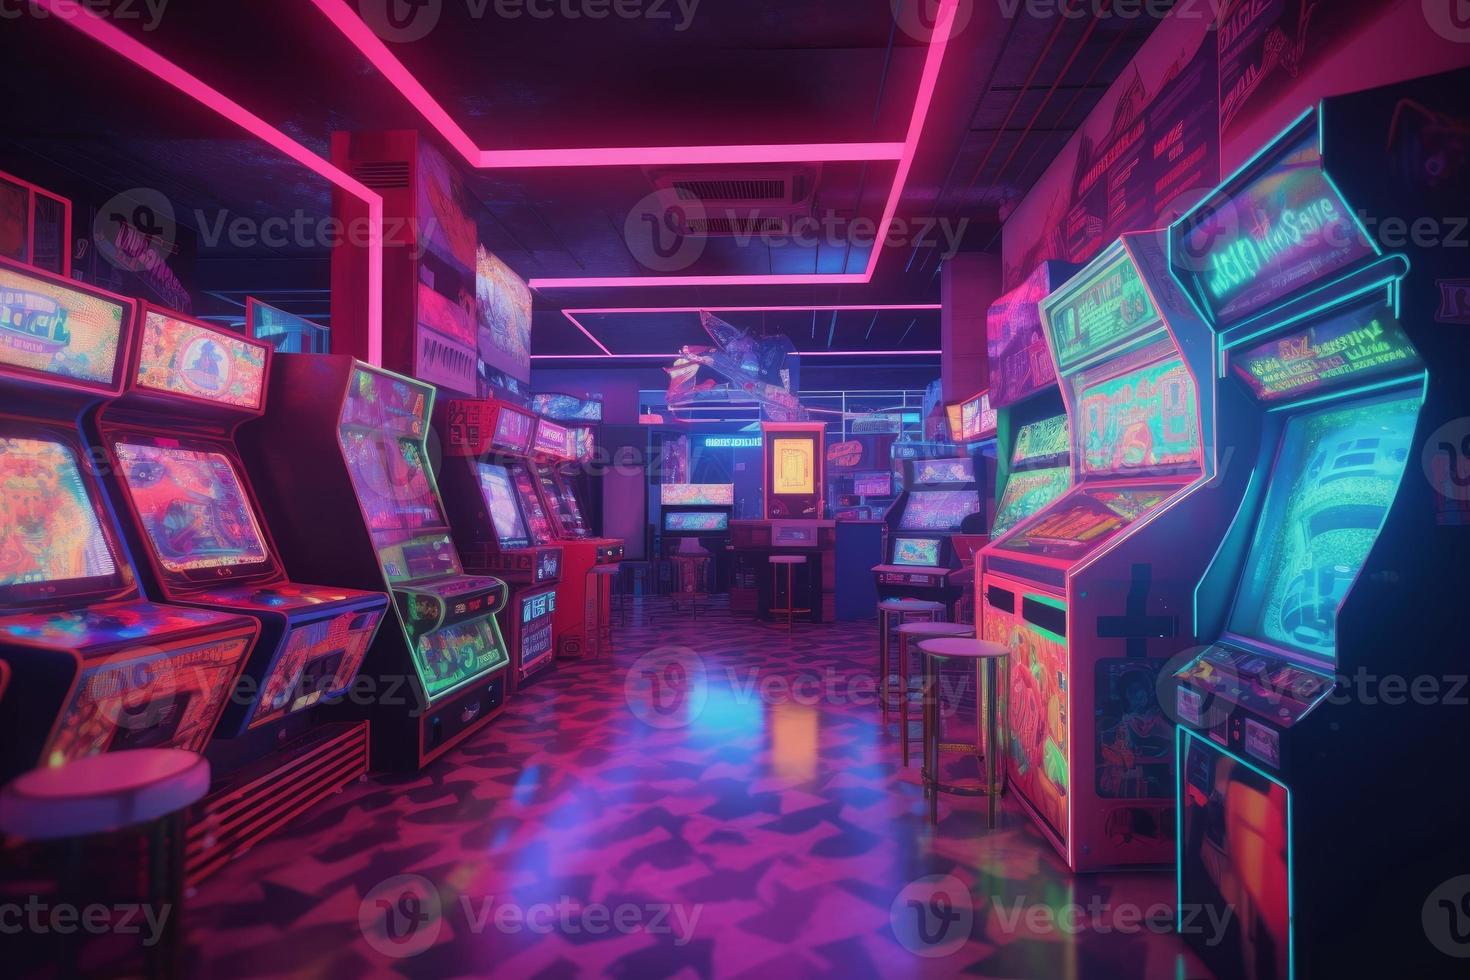 A room with old vintage arcade games photo - Arcade